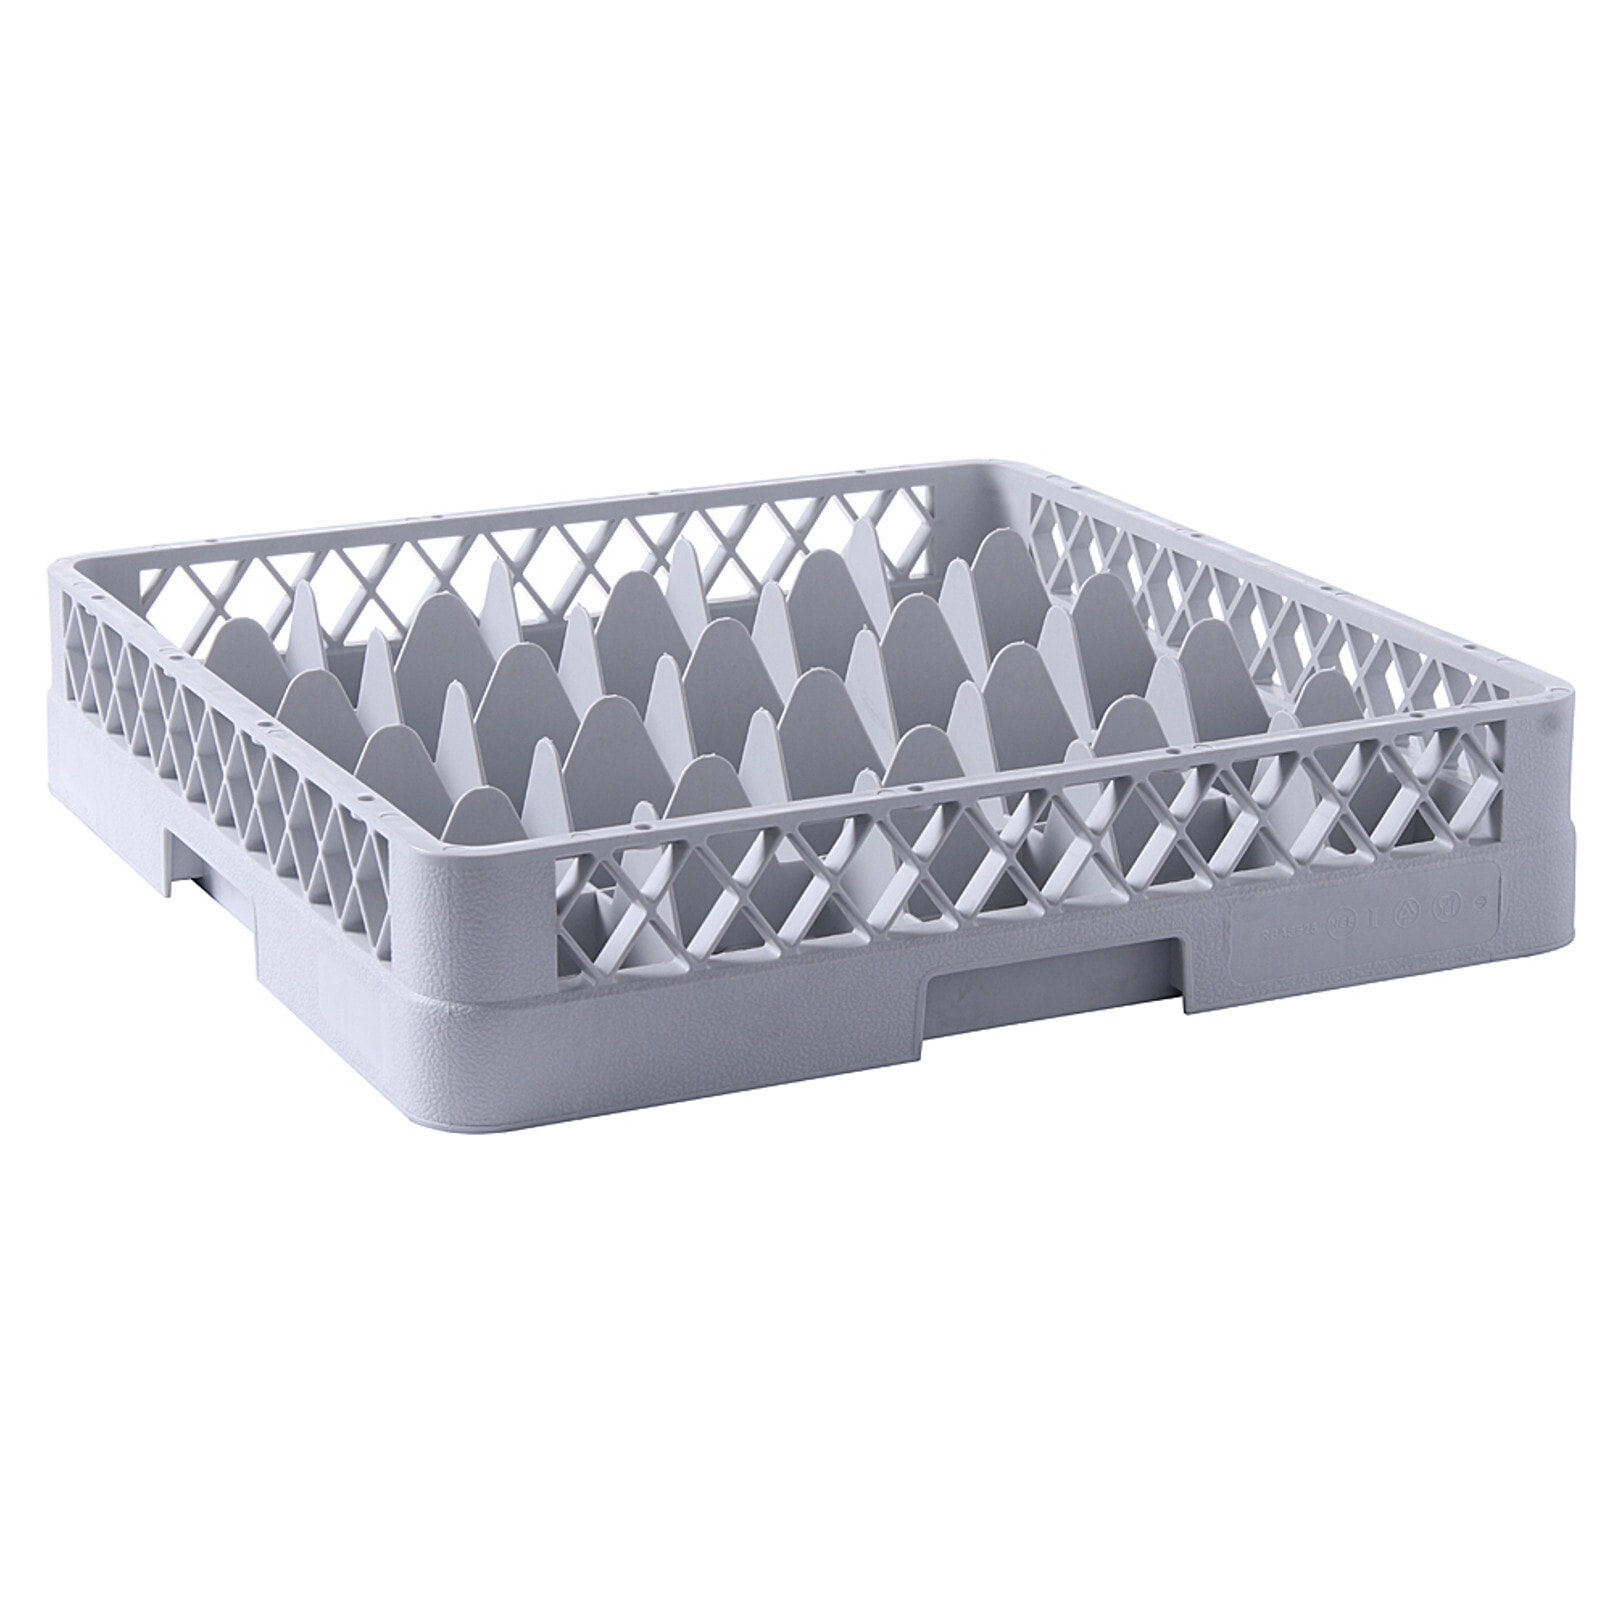 Dishwasher basket for glasses and glass 25 elements 50x50cm - Hendi 877036